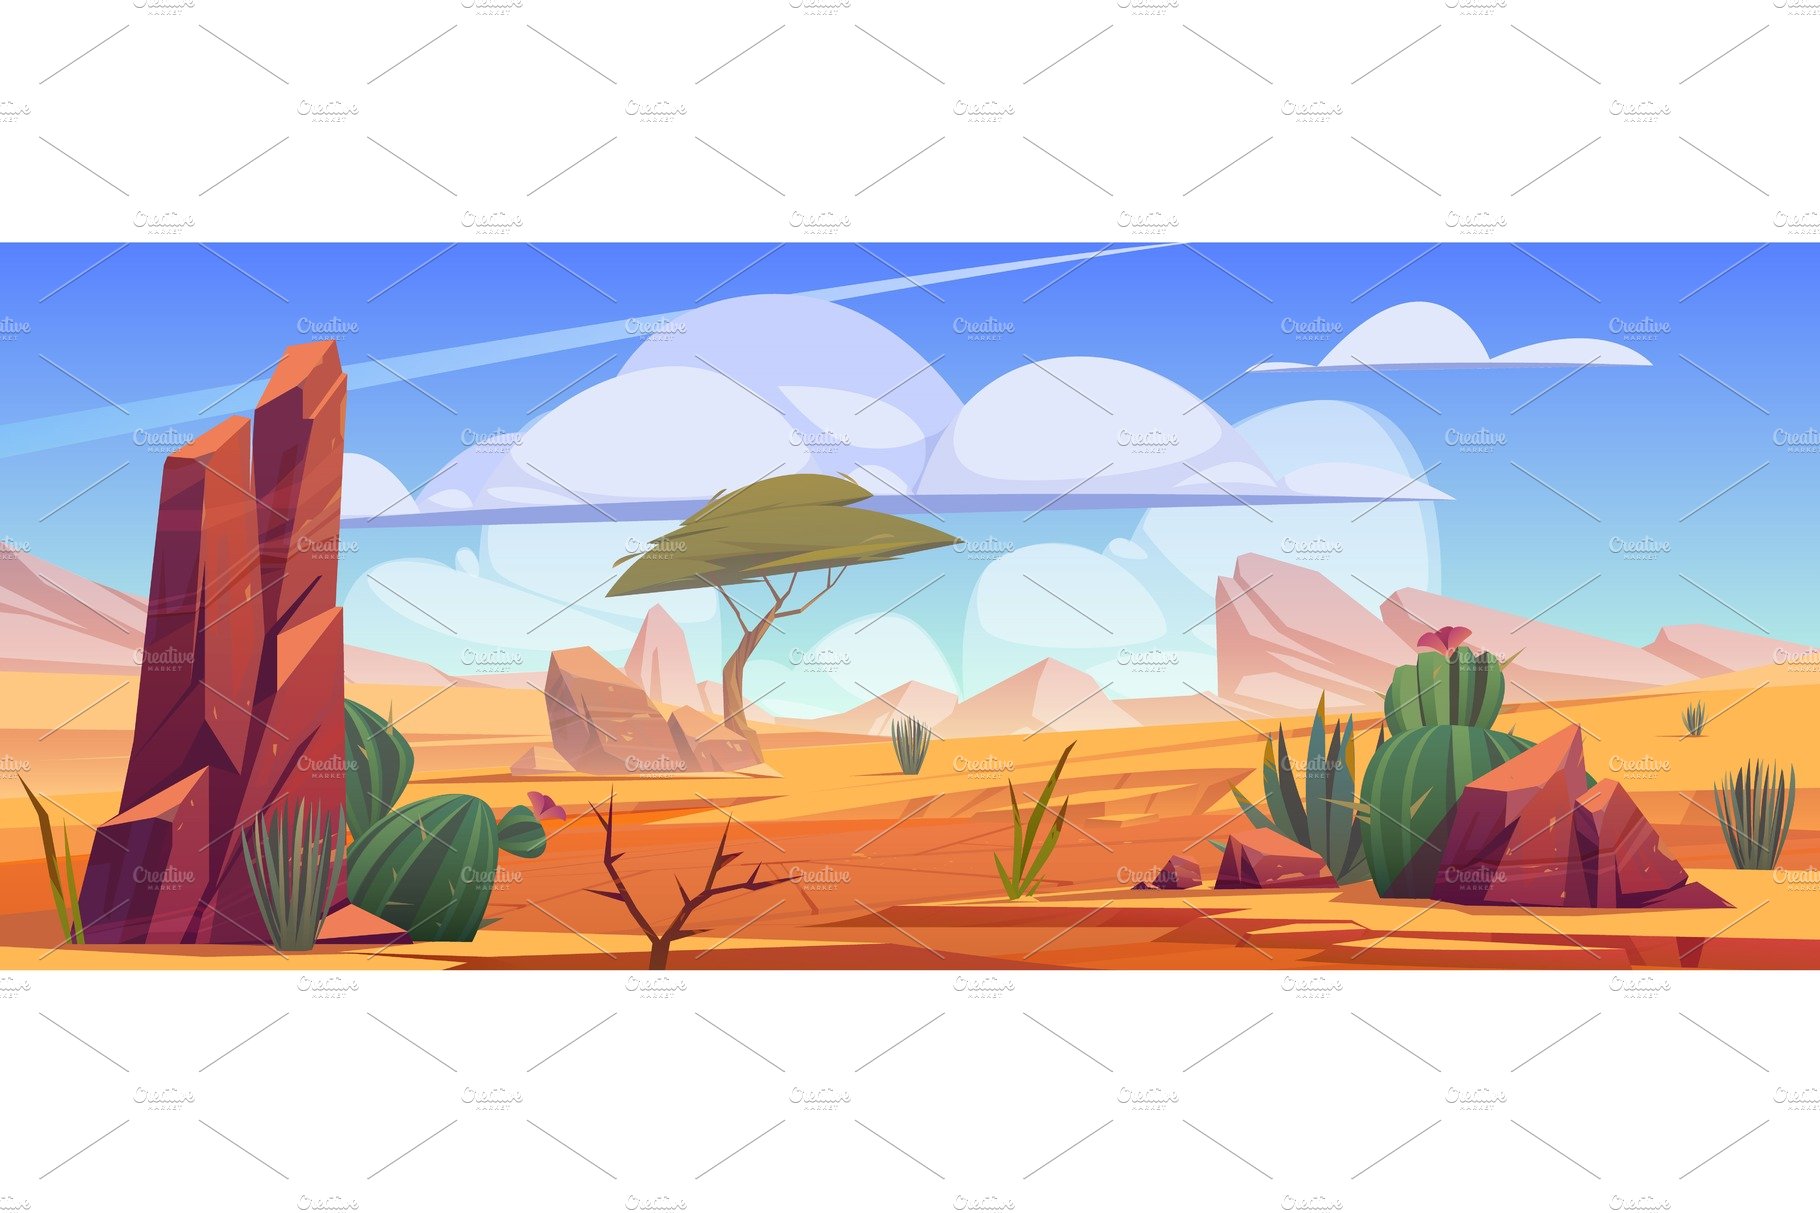 Desert landscape with rocks, tree cover image.